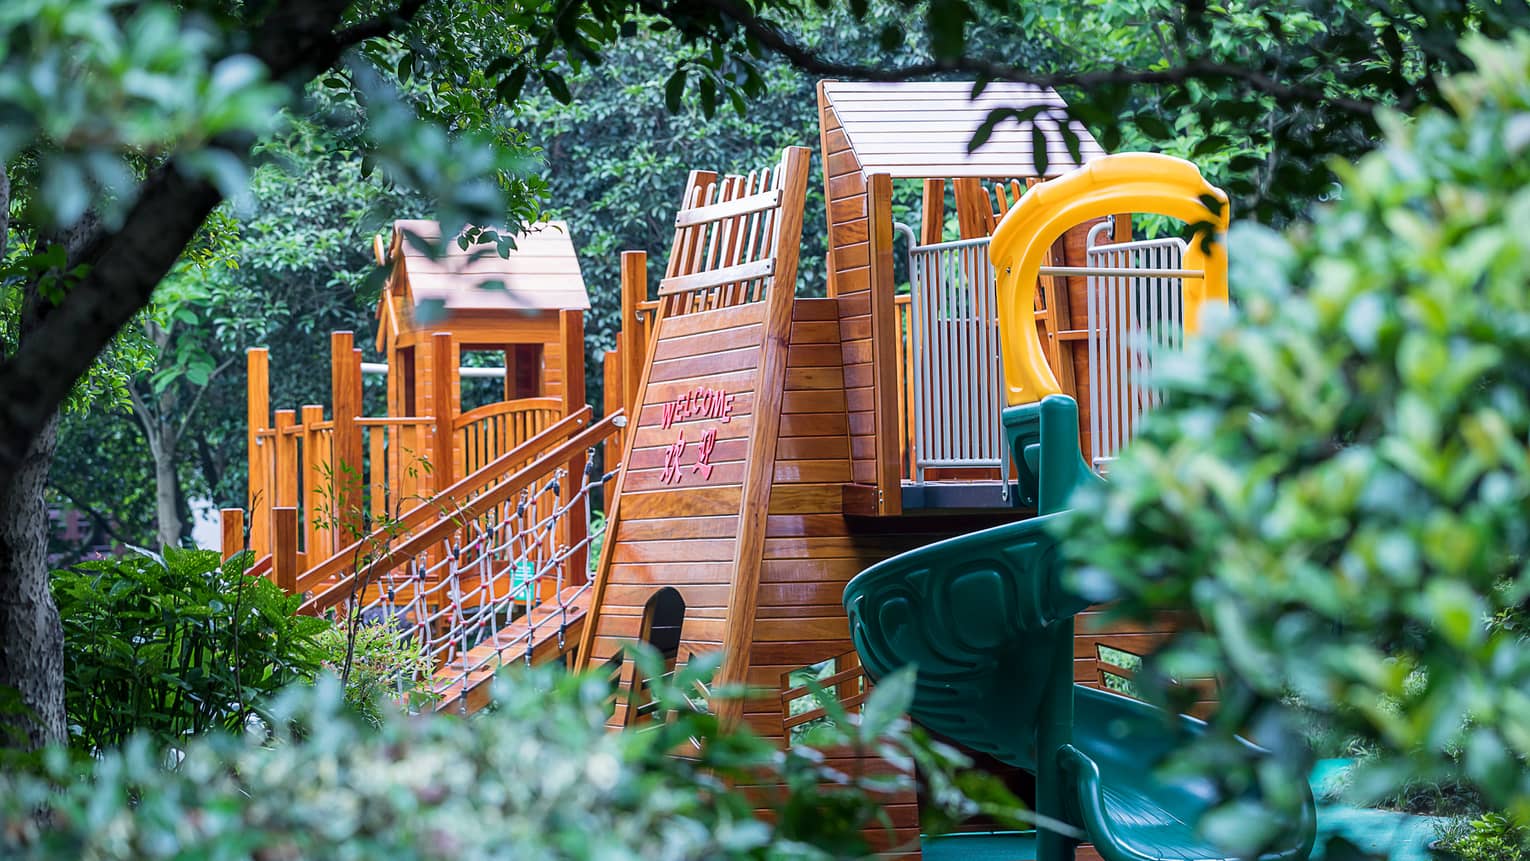 Outdoor wood playground, spiral plastic slide between trees